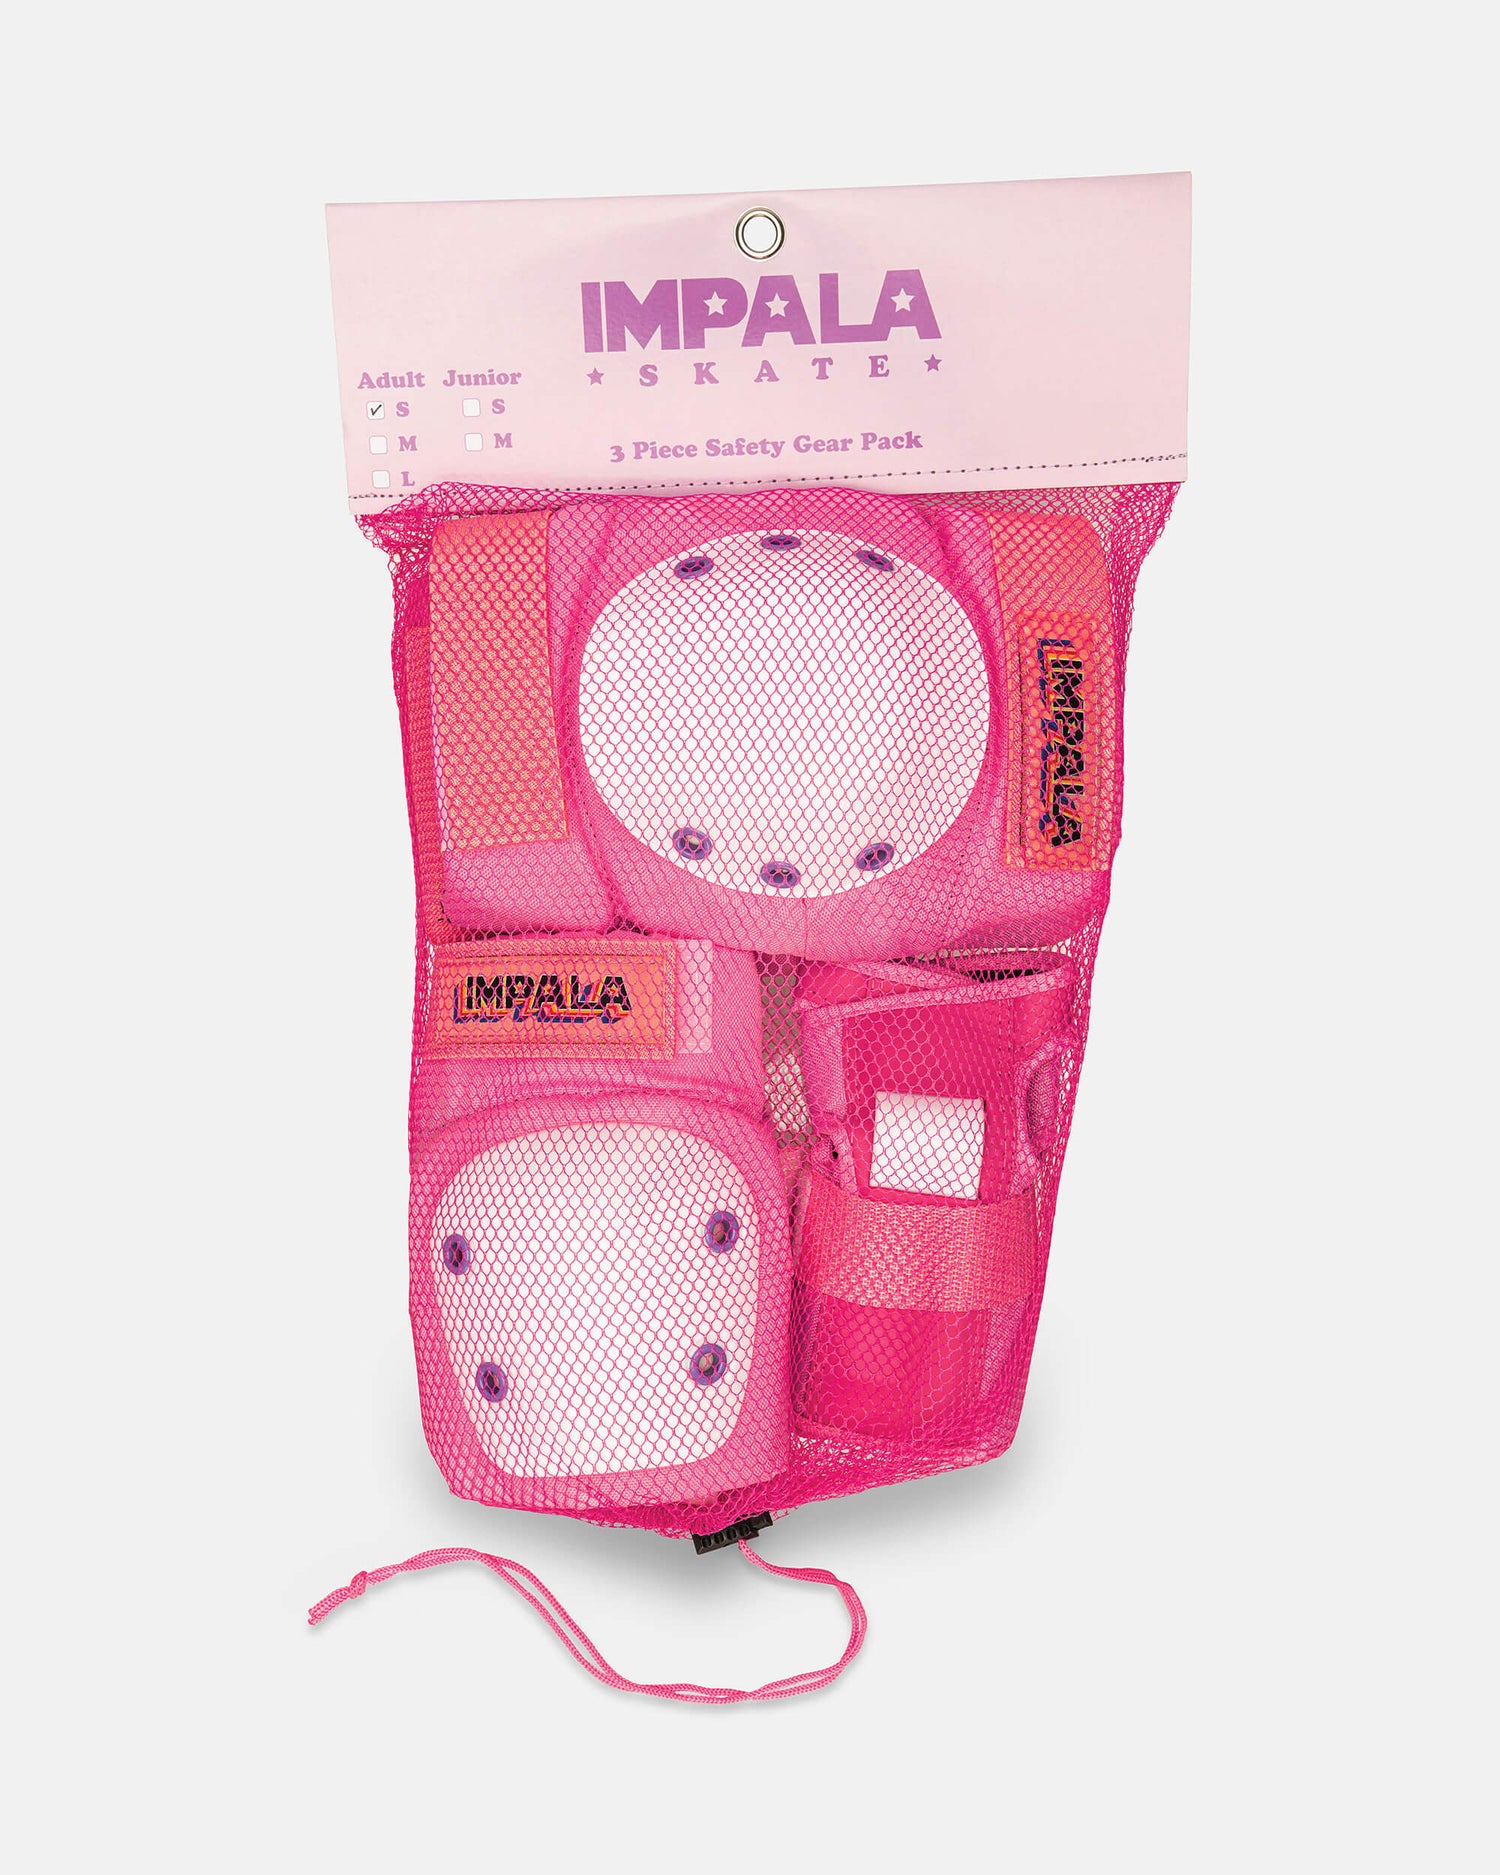 Impala Adult Schutzausrüstung Pack - Pink